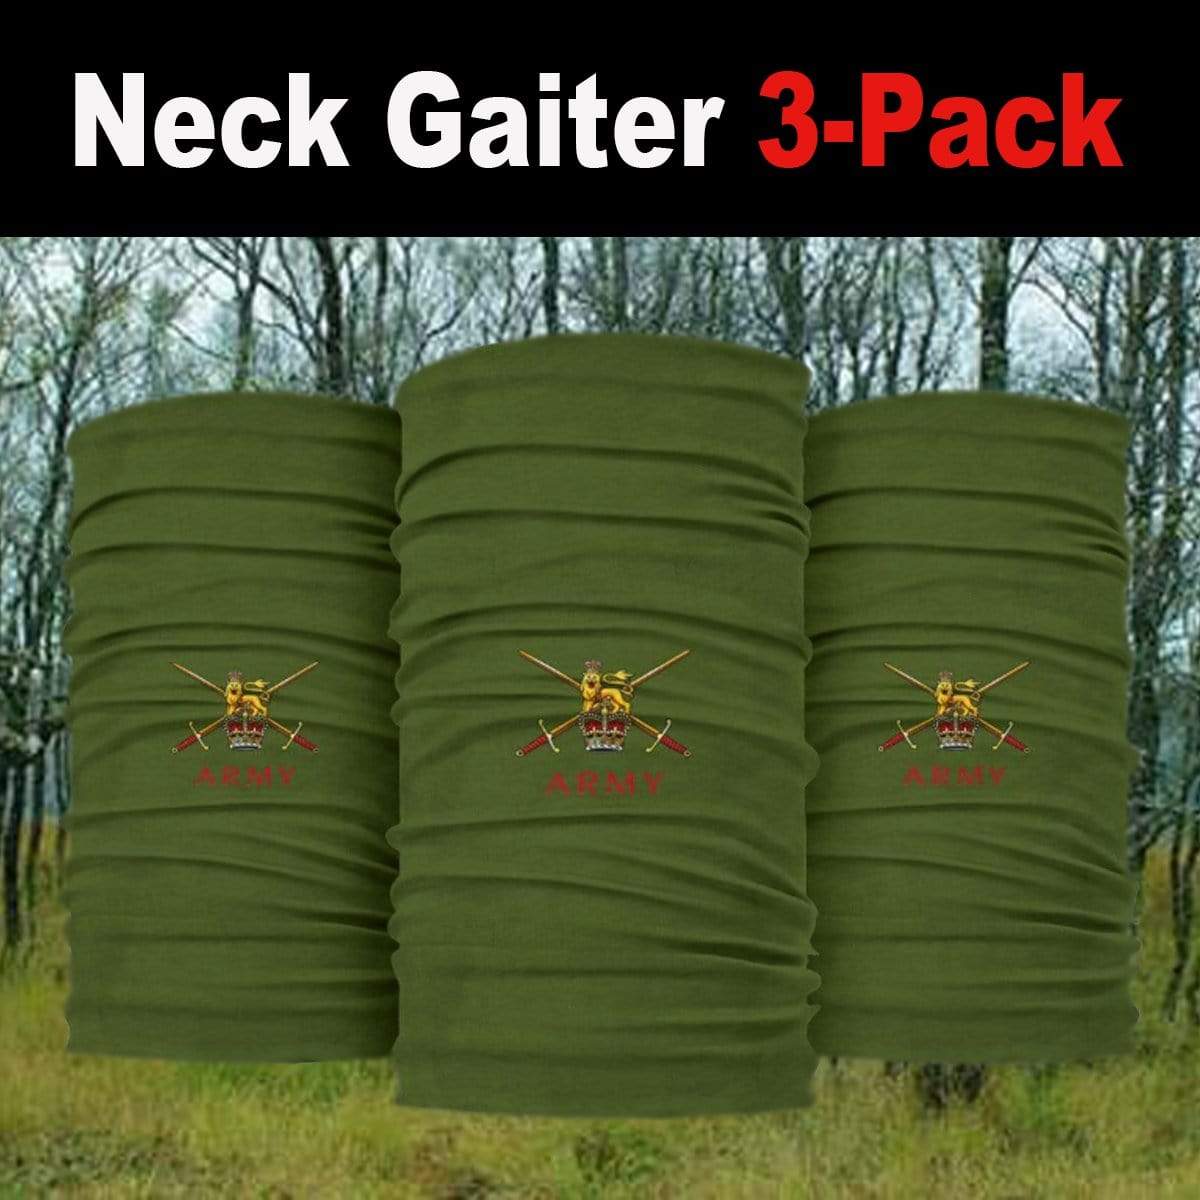 British Army Neck Gaiter/Headover 3-Pack